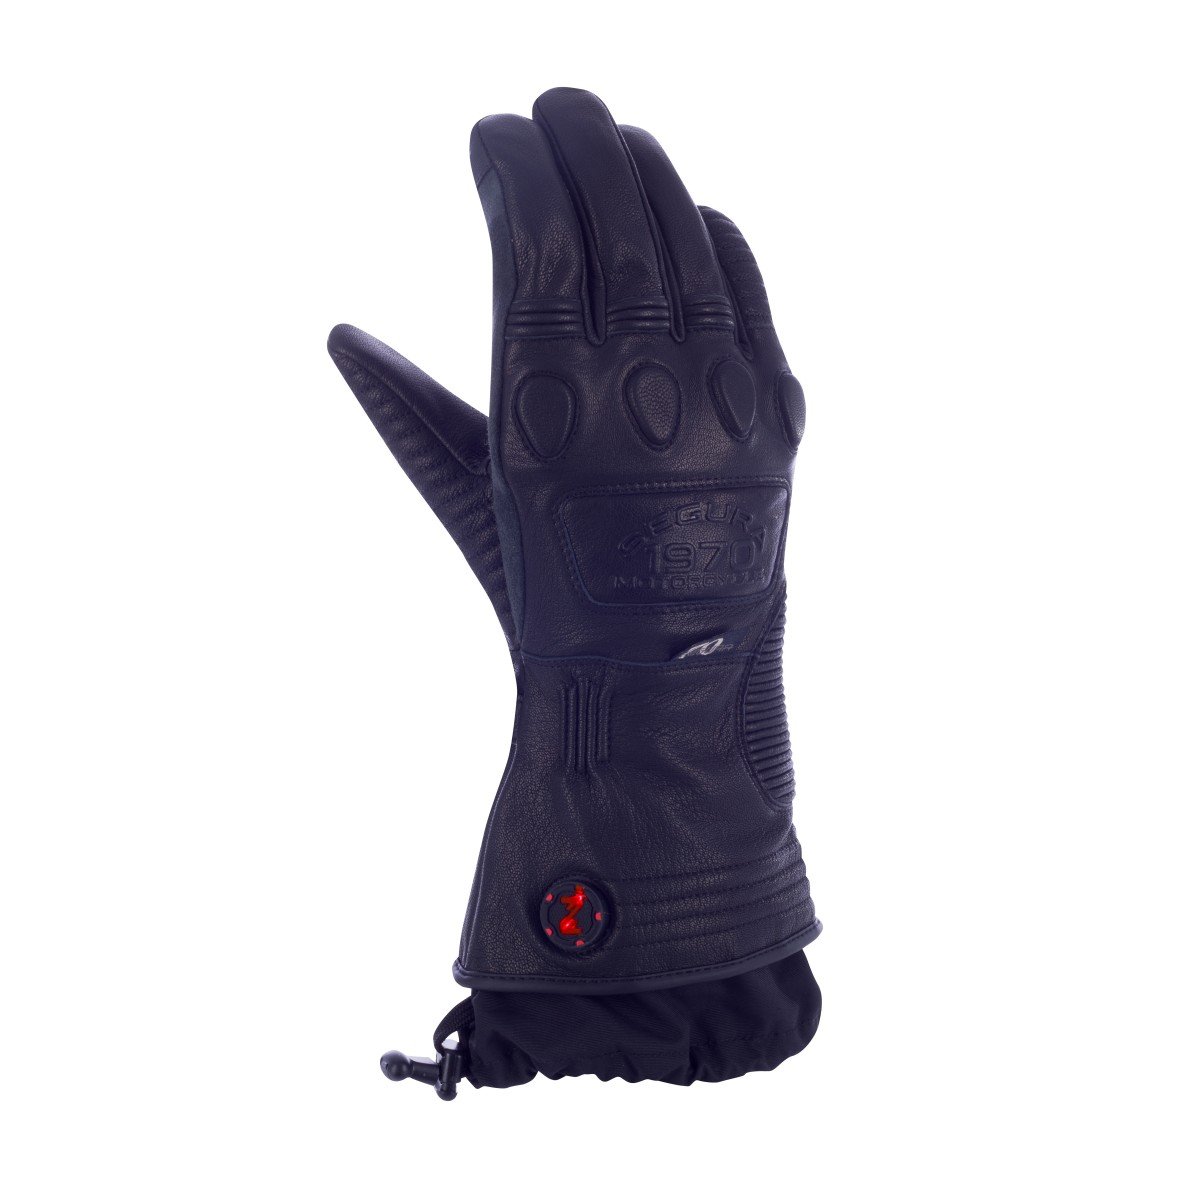 Image of Segura Shiro Black Heated Gloves Size T10 ID 3660815151839